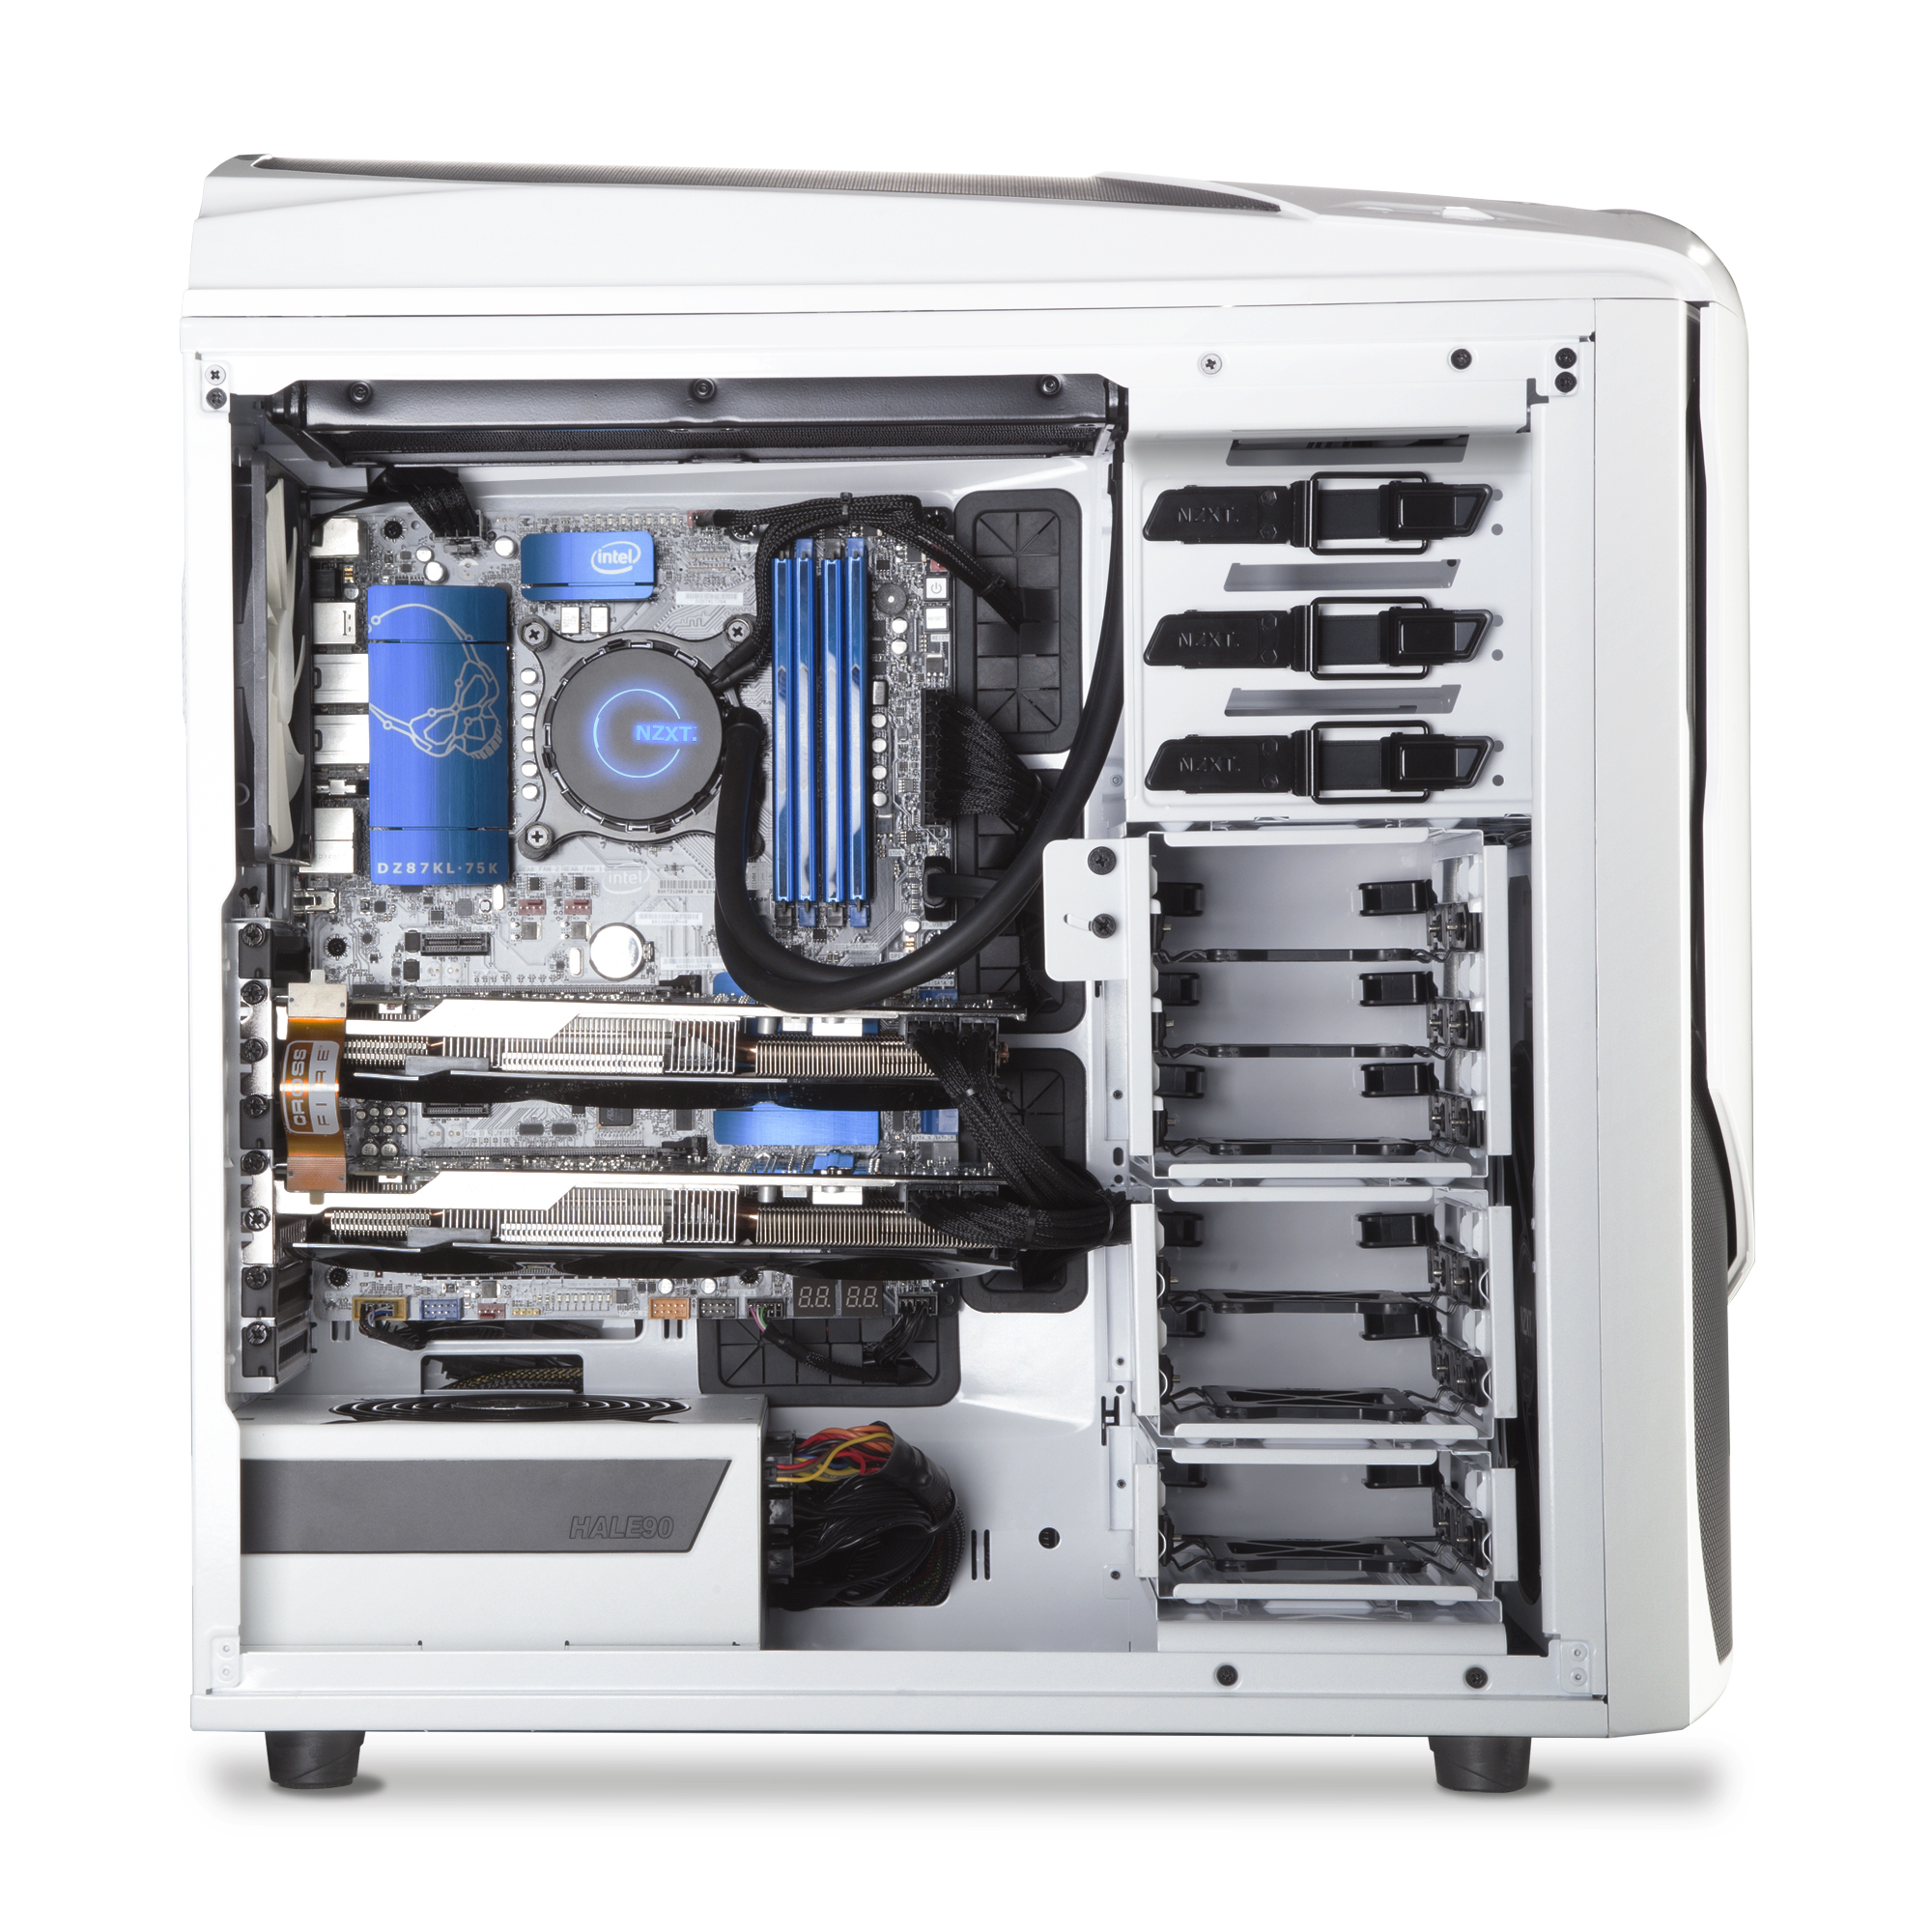 NZXT - NZXT Phantom 530 Full Tower Gaming Case - White